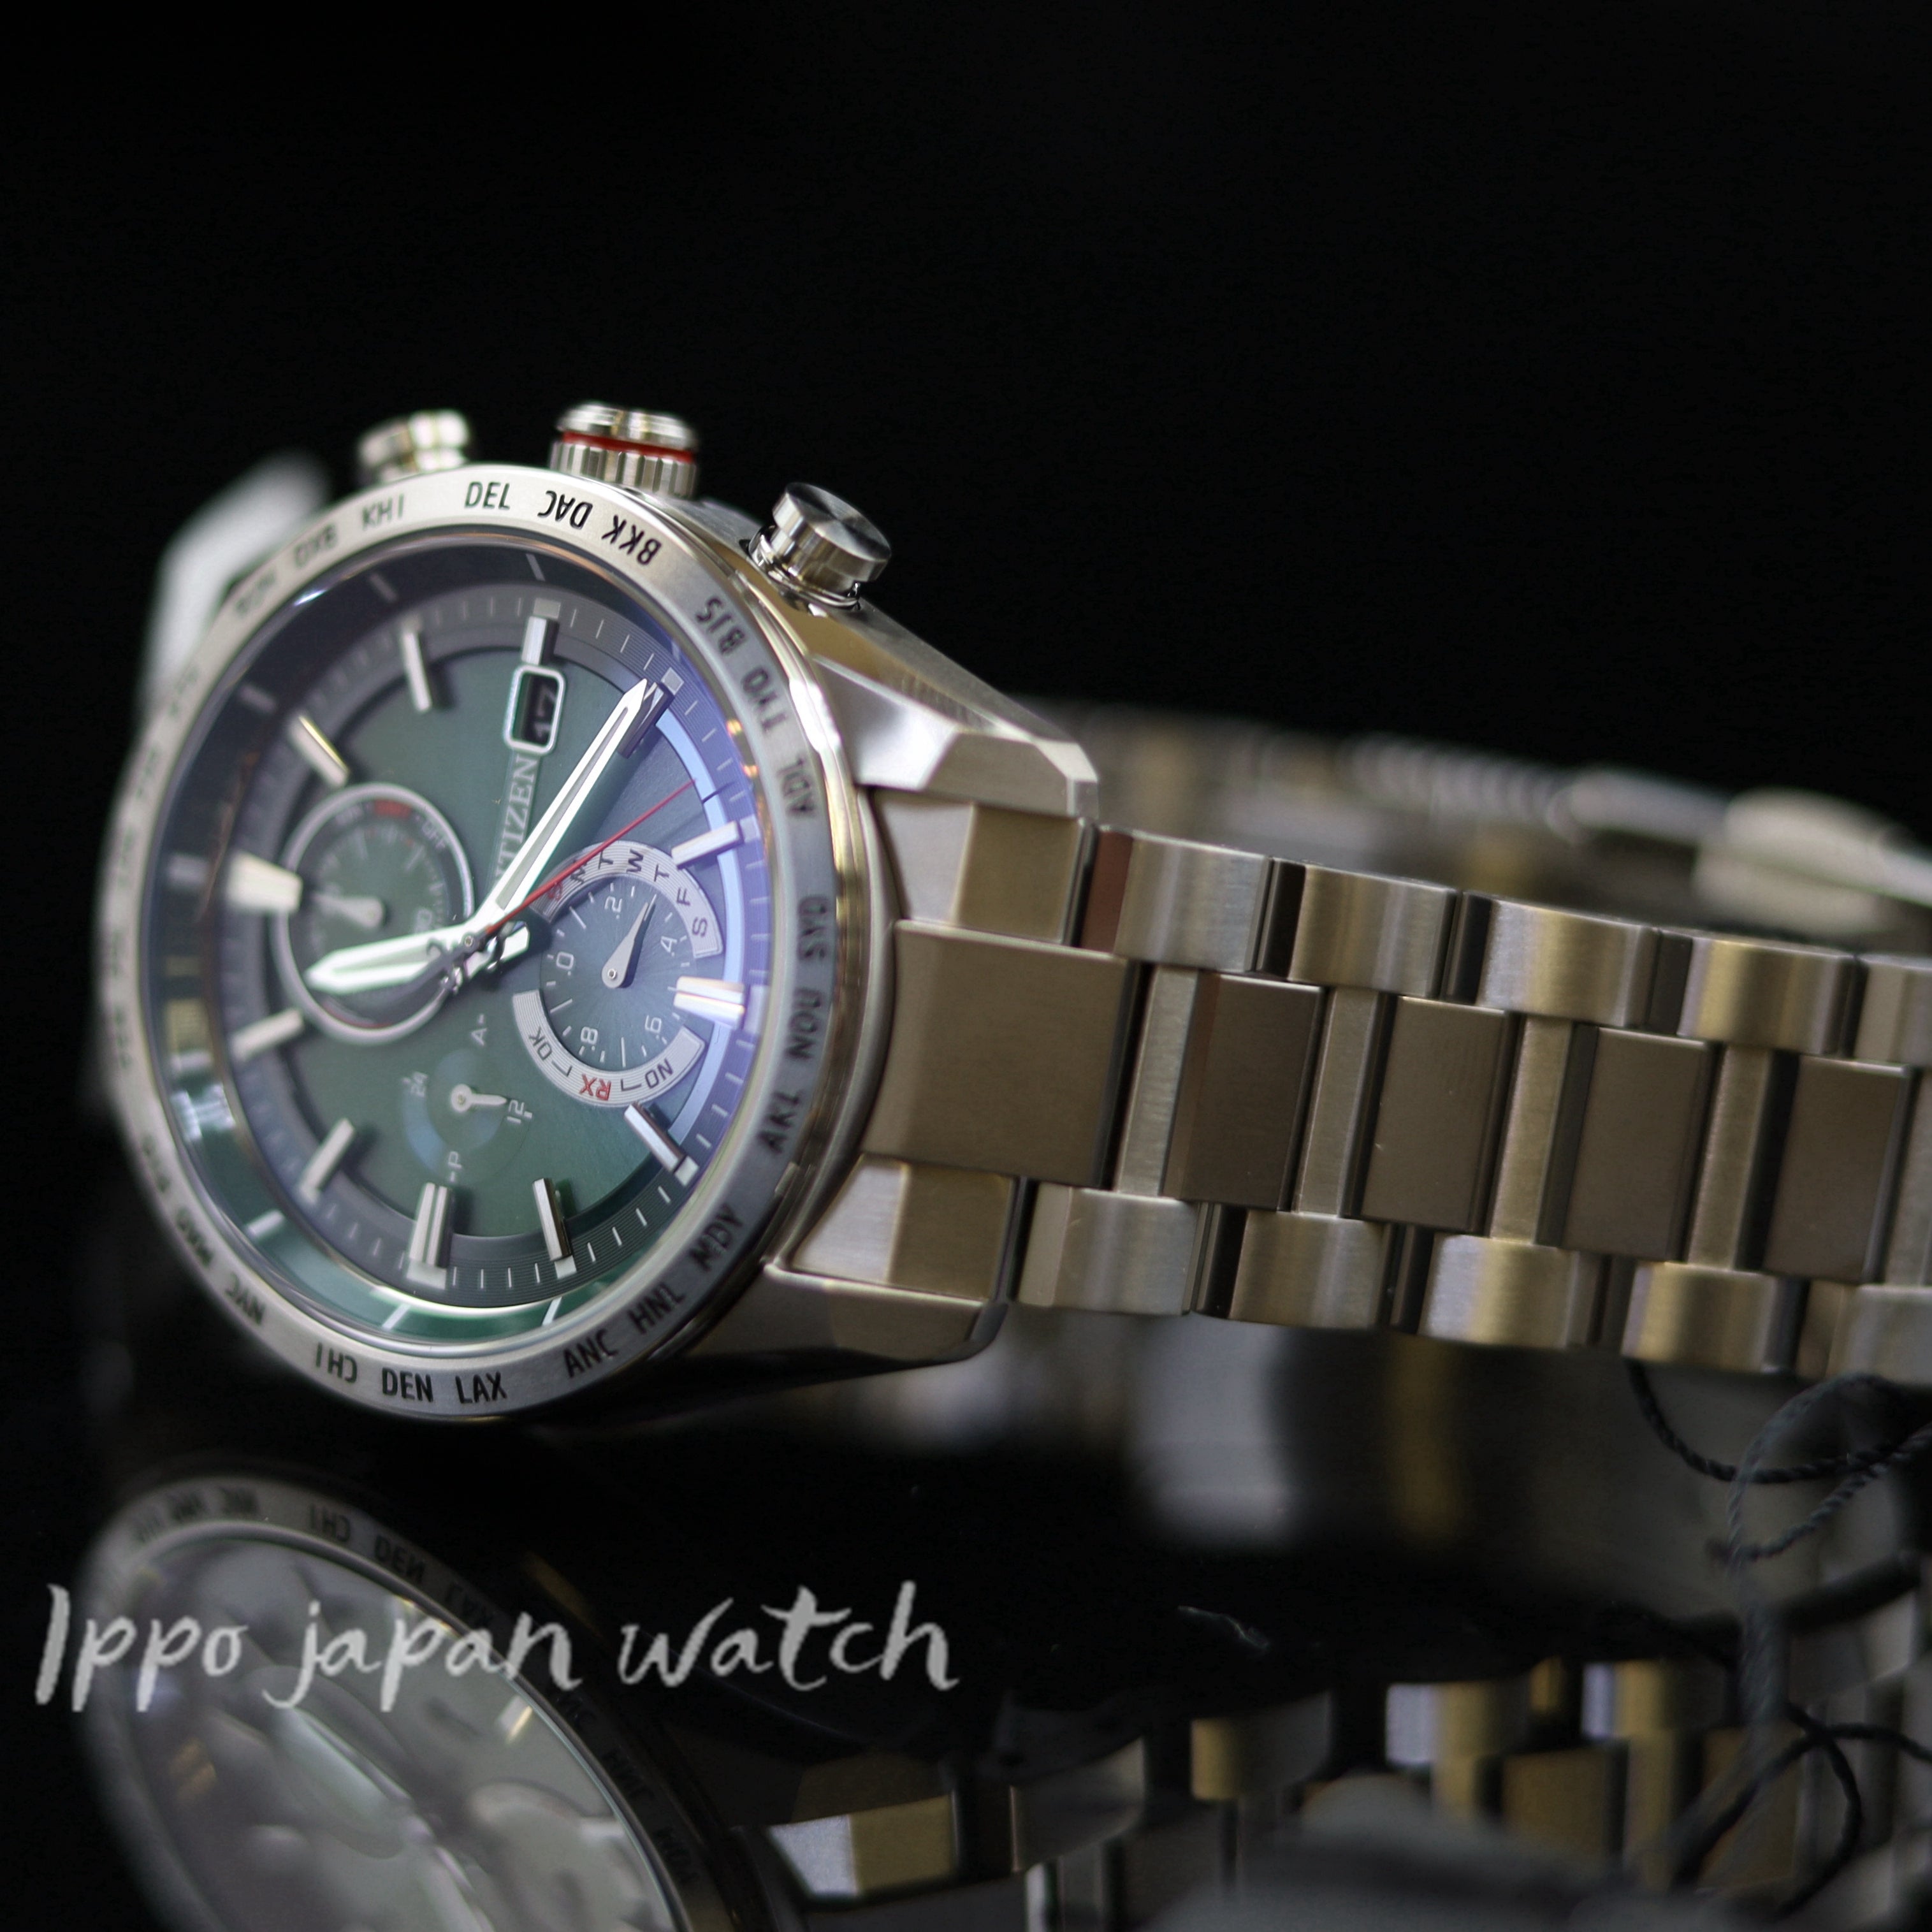 CITIZEN Atessa AT8181-63W Eco-Drive Super Titanium watch - IPPO JAPAN WATCH 